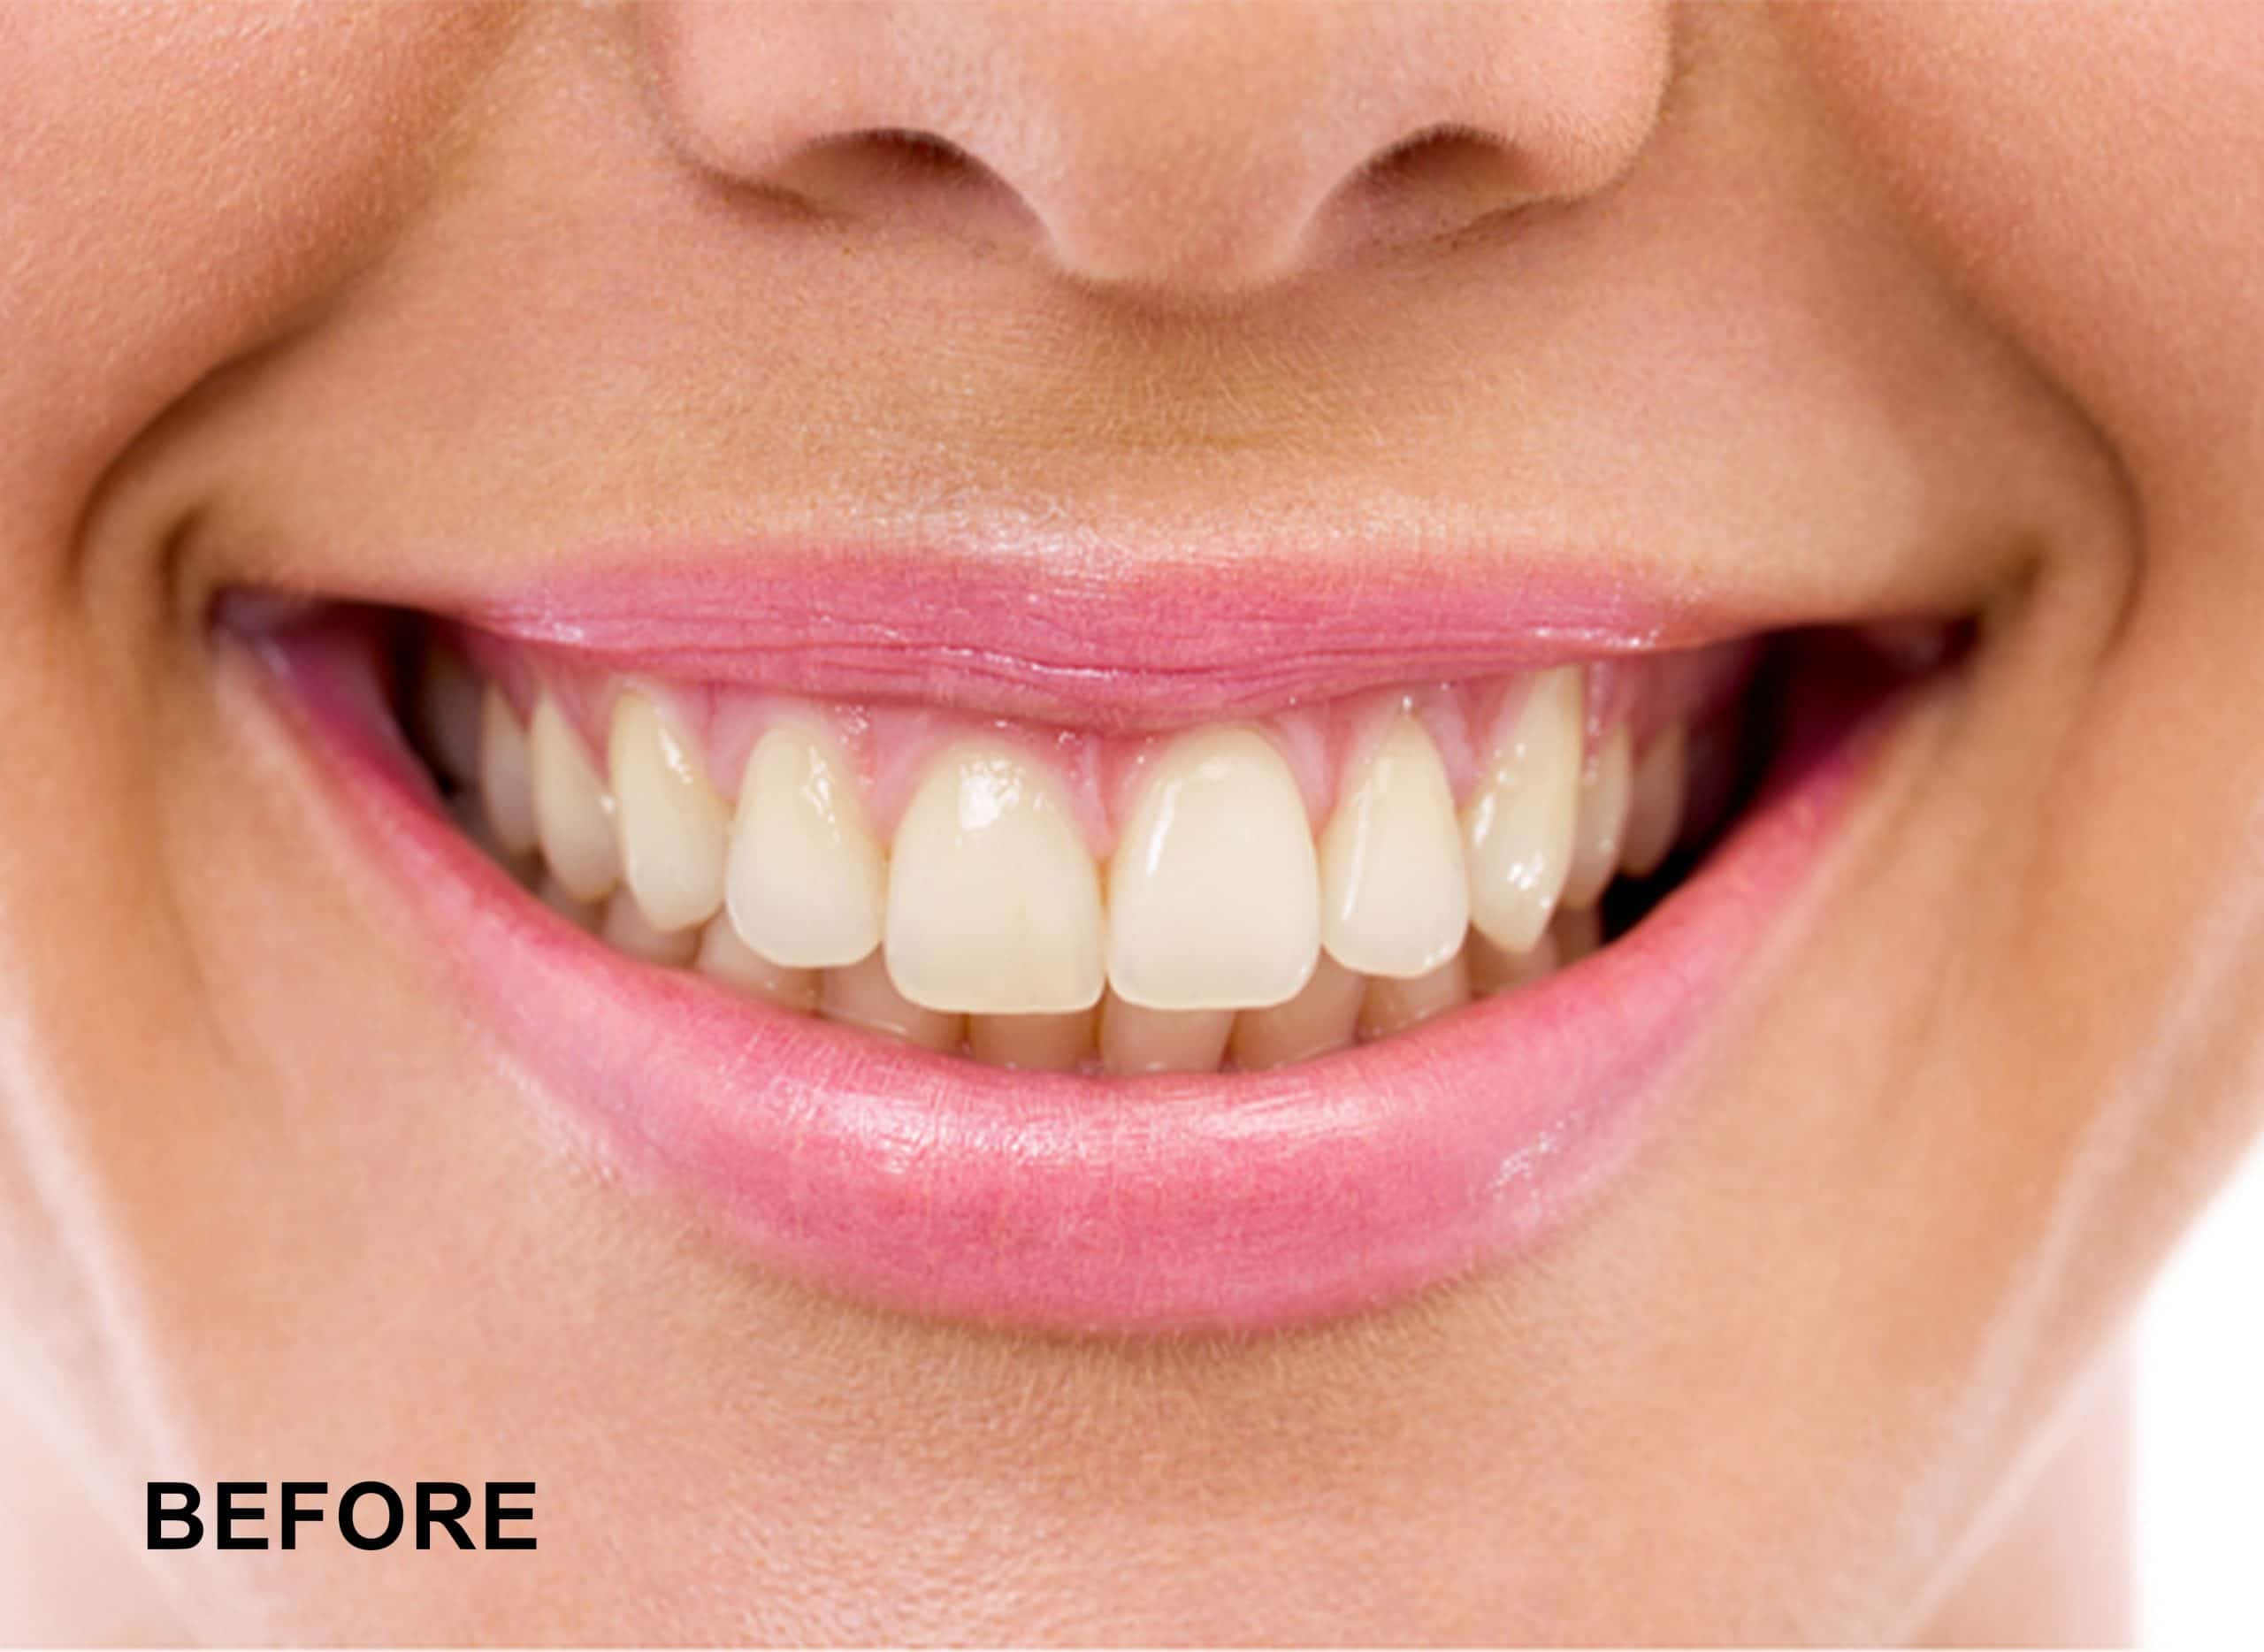 teeth before having whitening treatment